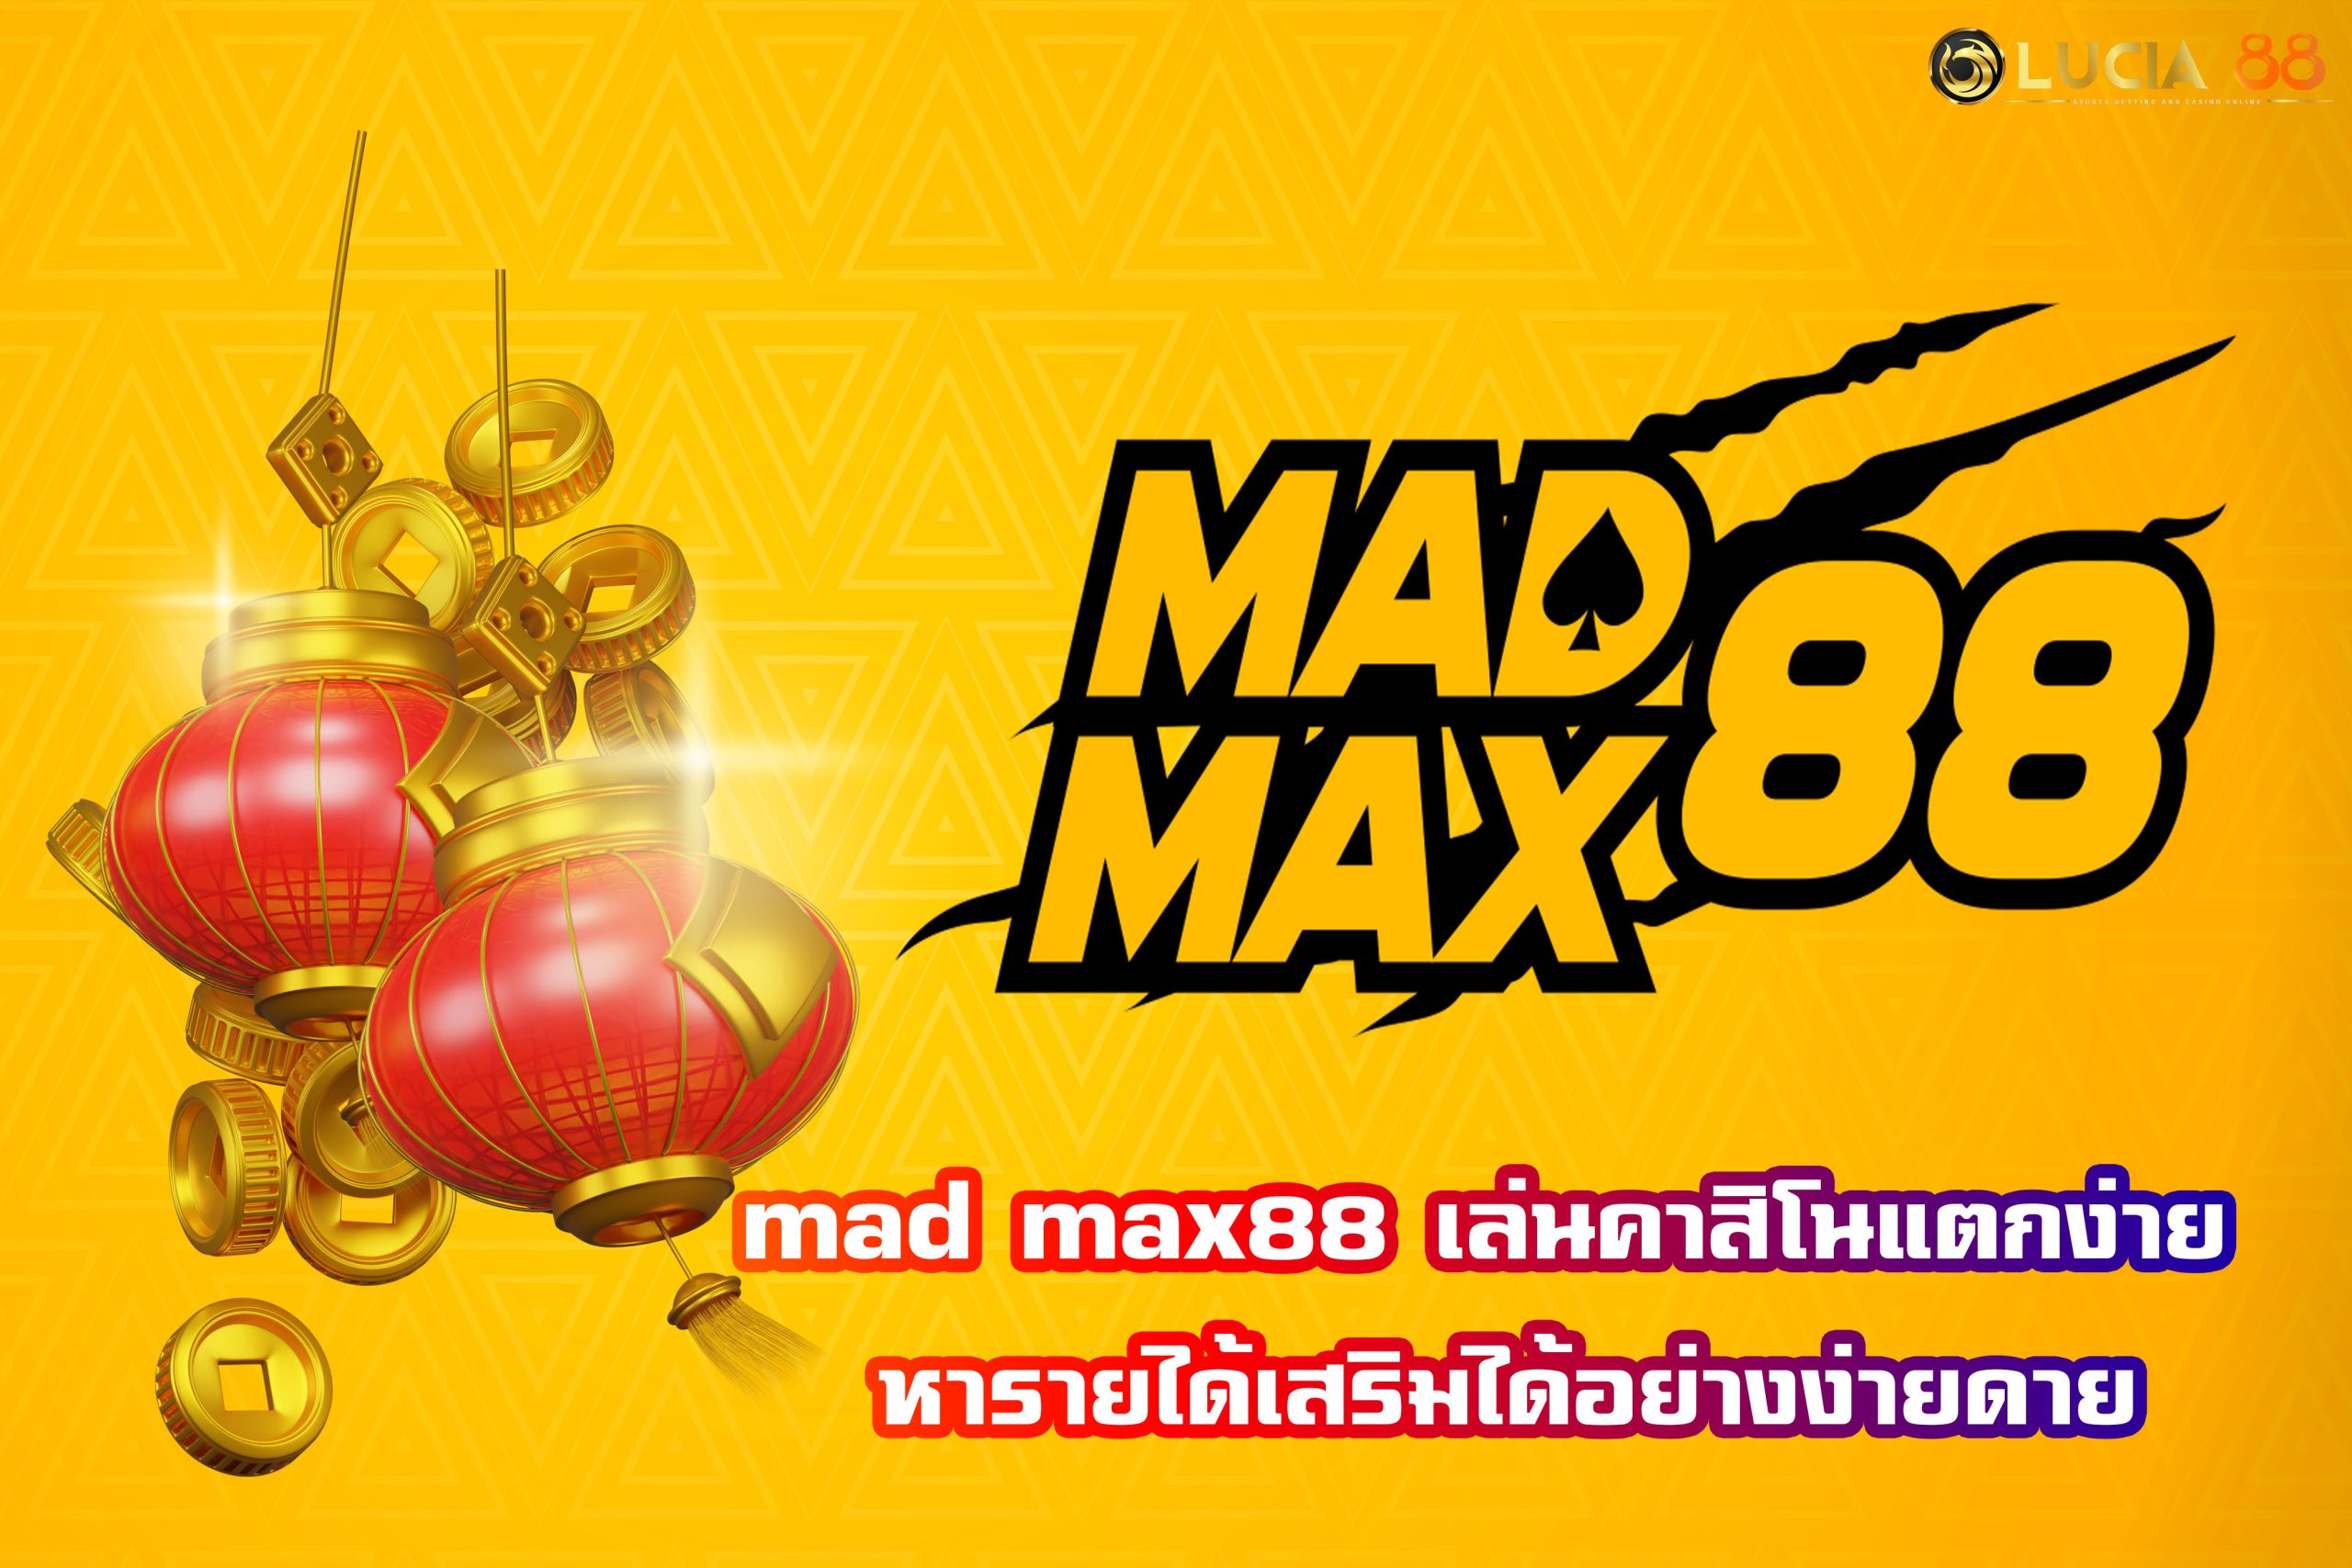 mad max88 เล่นสล็อตฟรีสปิน รับเงินสดจากเกมสล็อตออนไลน์